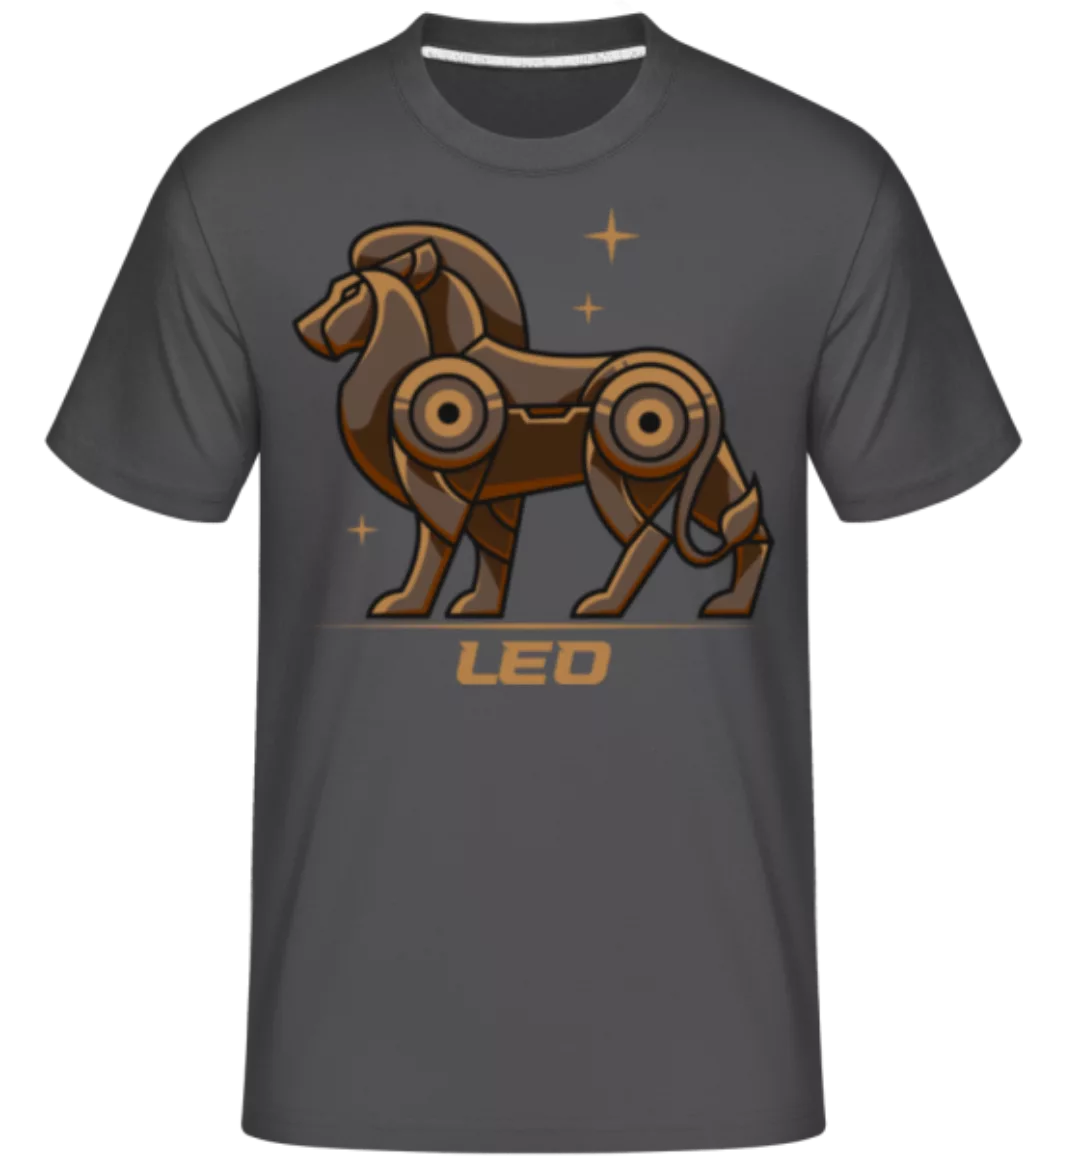 Mecha Robotic Zodiac Sign Leo · Shirtinator Männer T-Shirt günstig online kaufen